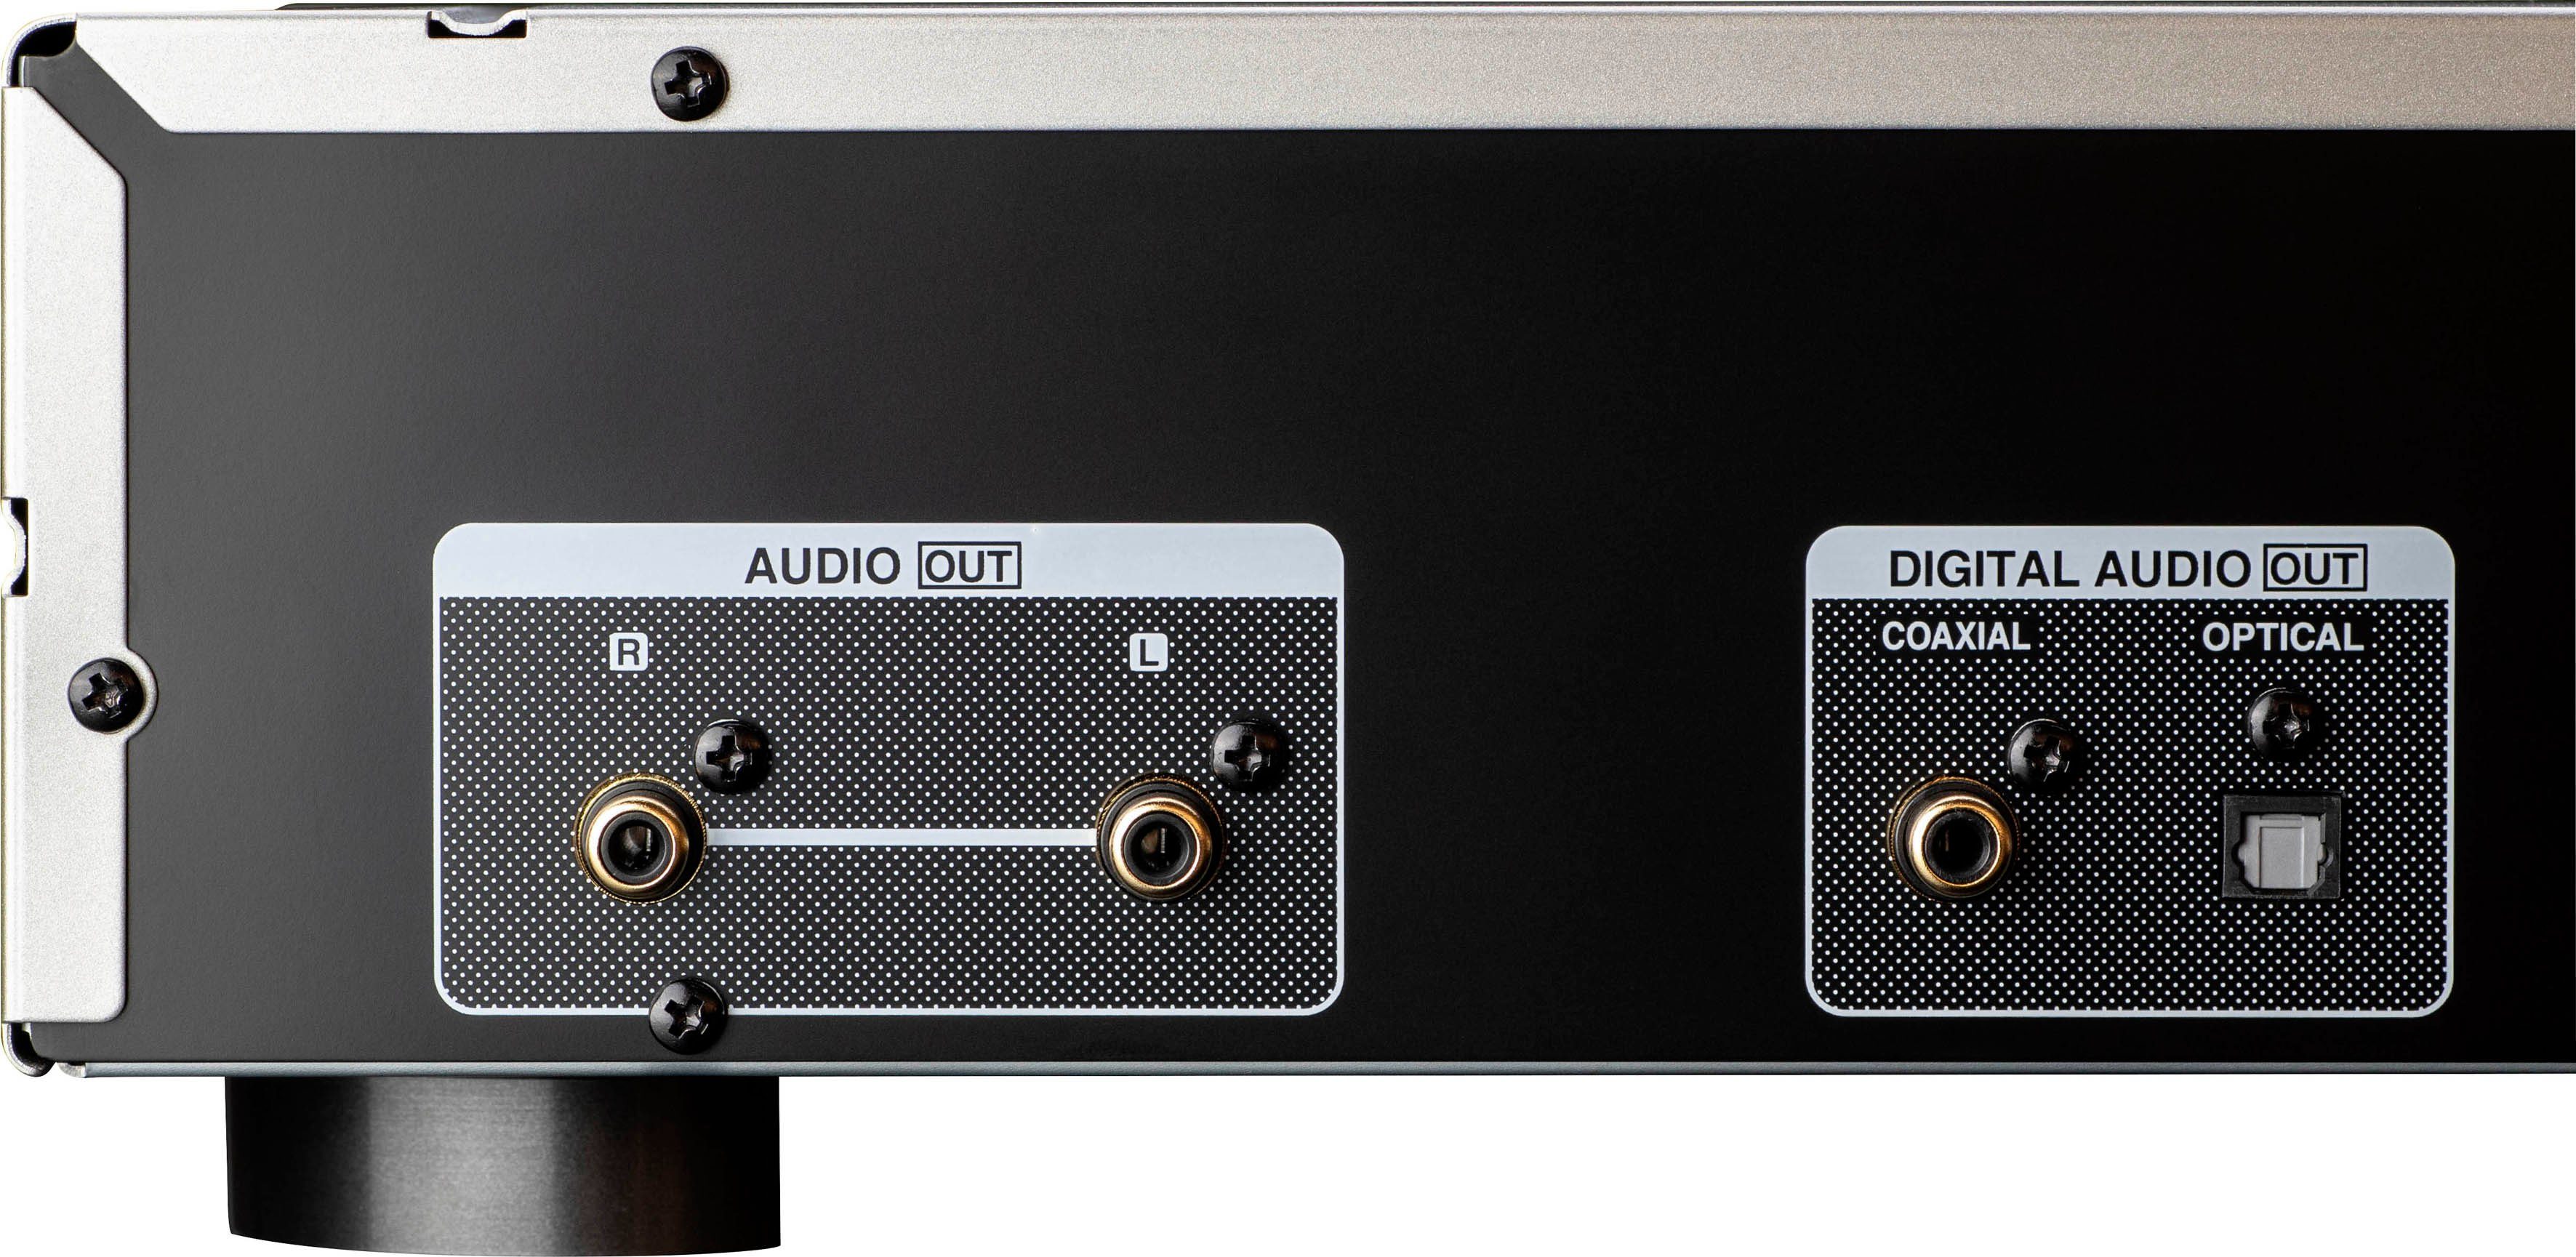 Denon DCD-900NE silber CD-Player (USB-Audiowiedergabe)